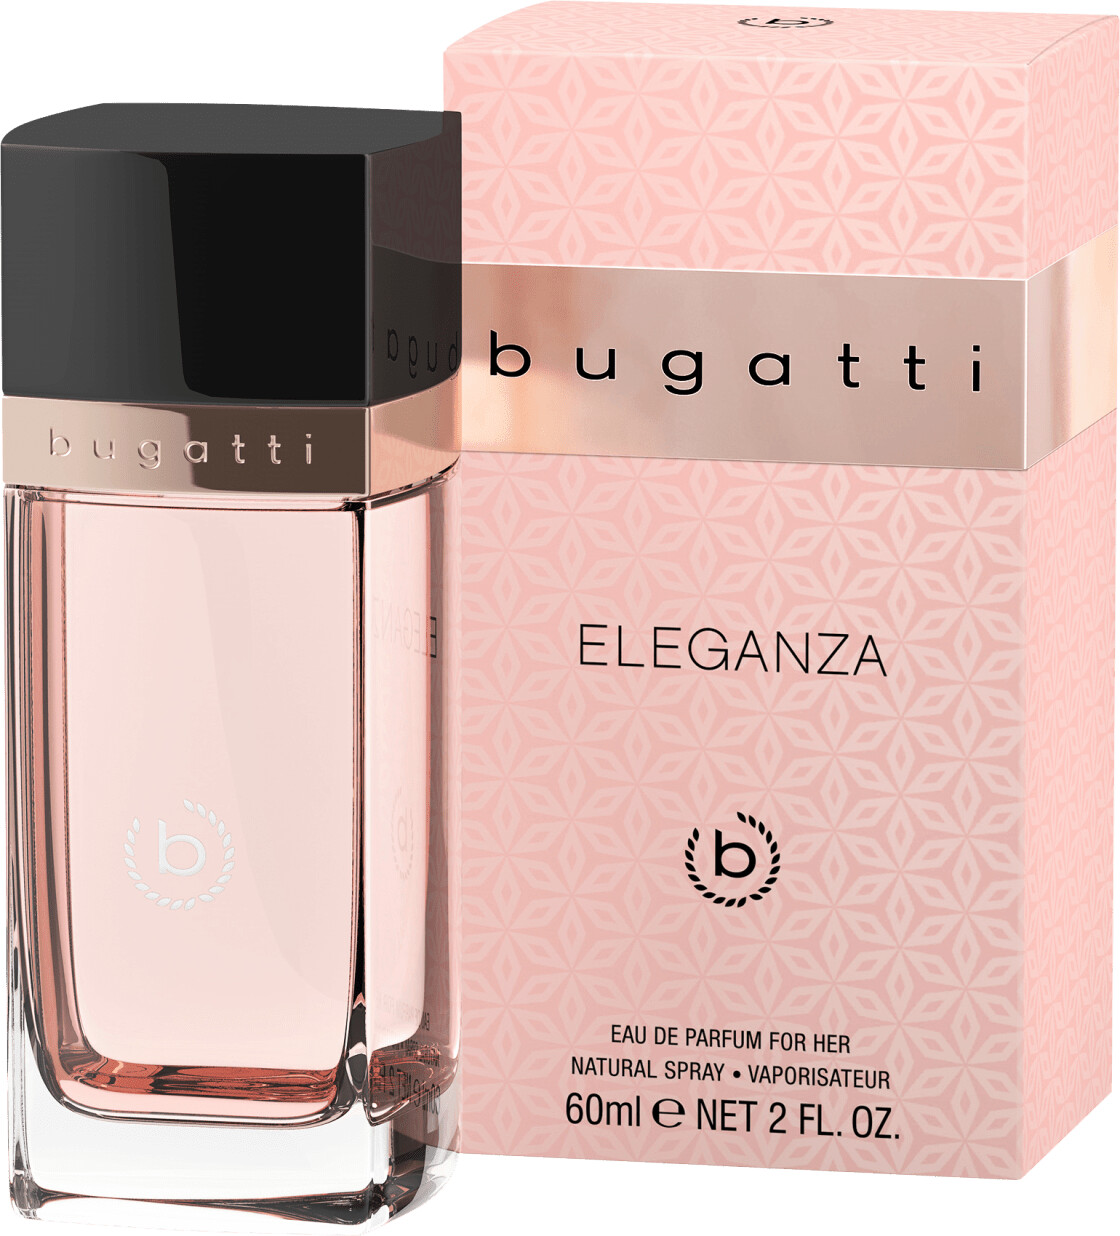 Bugatti Eleganza Eau de Parfum | (60ml) € bei 17,45 ab Preisvergleich